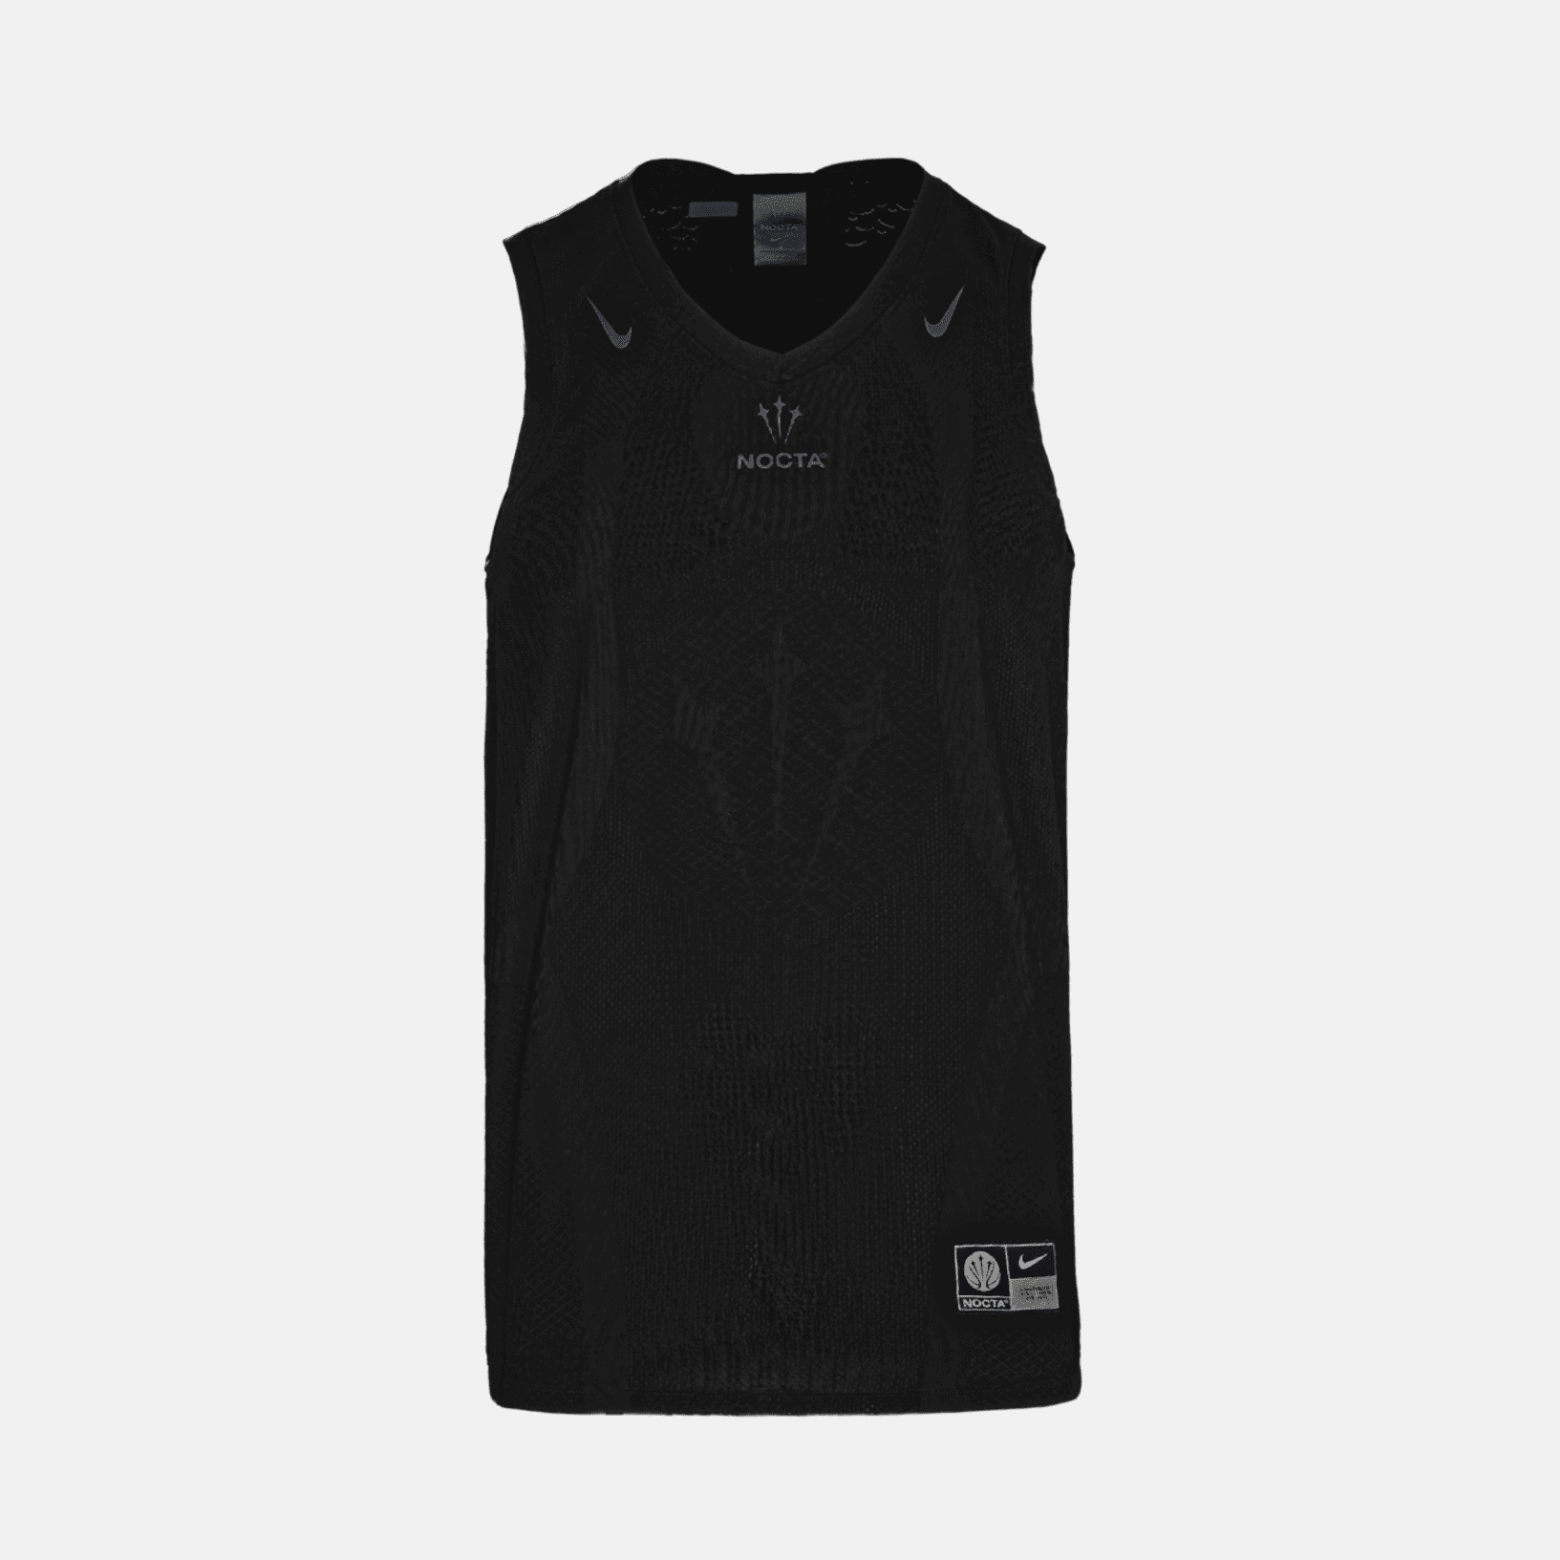 Nike x NOCTA Basketball T-shirt Black